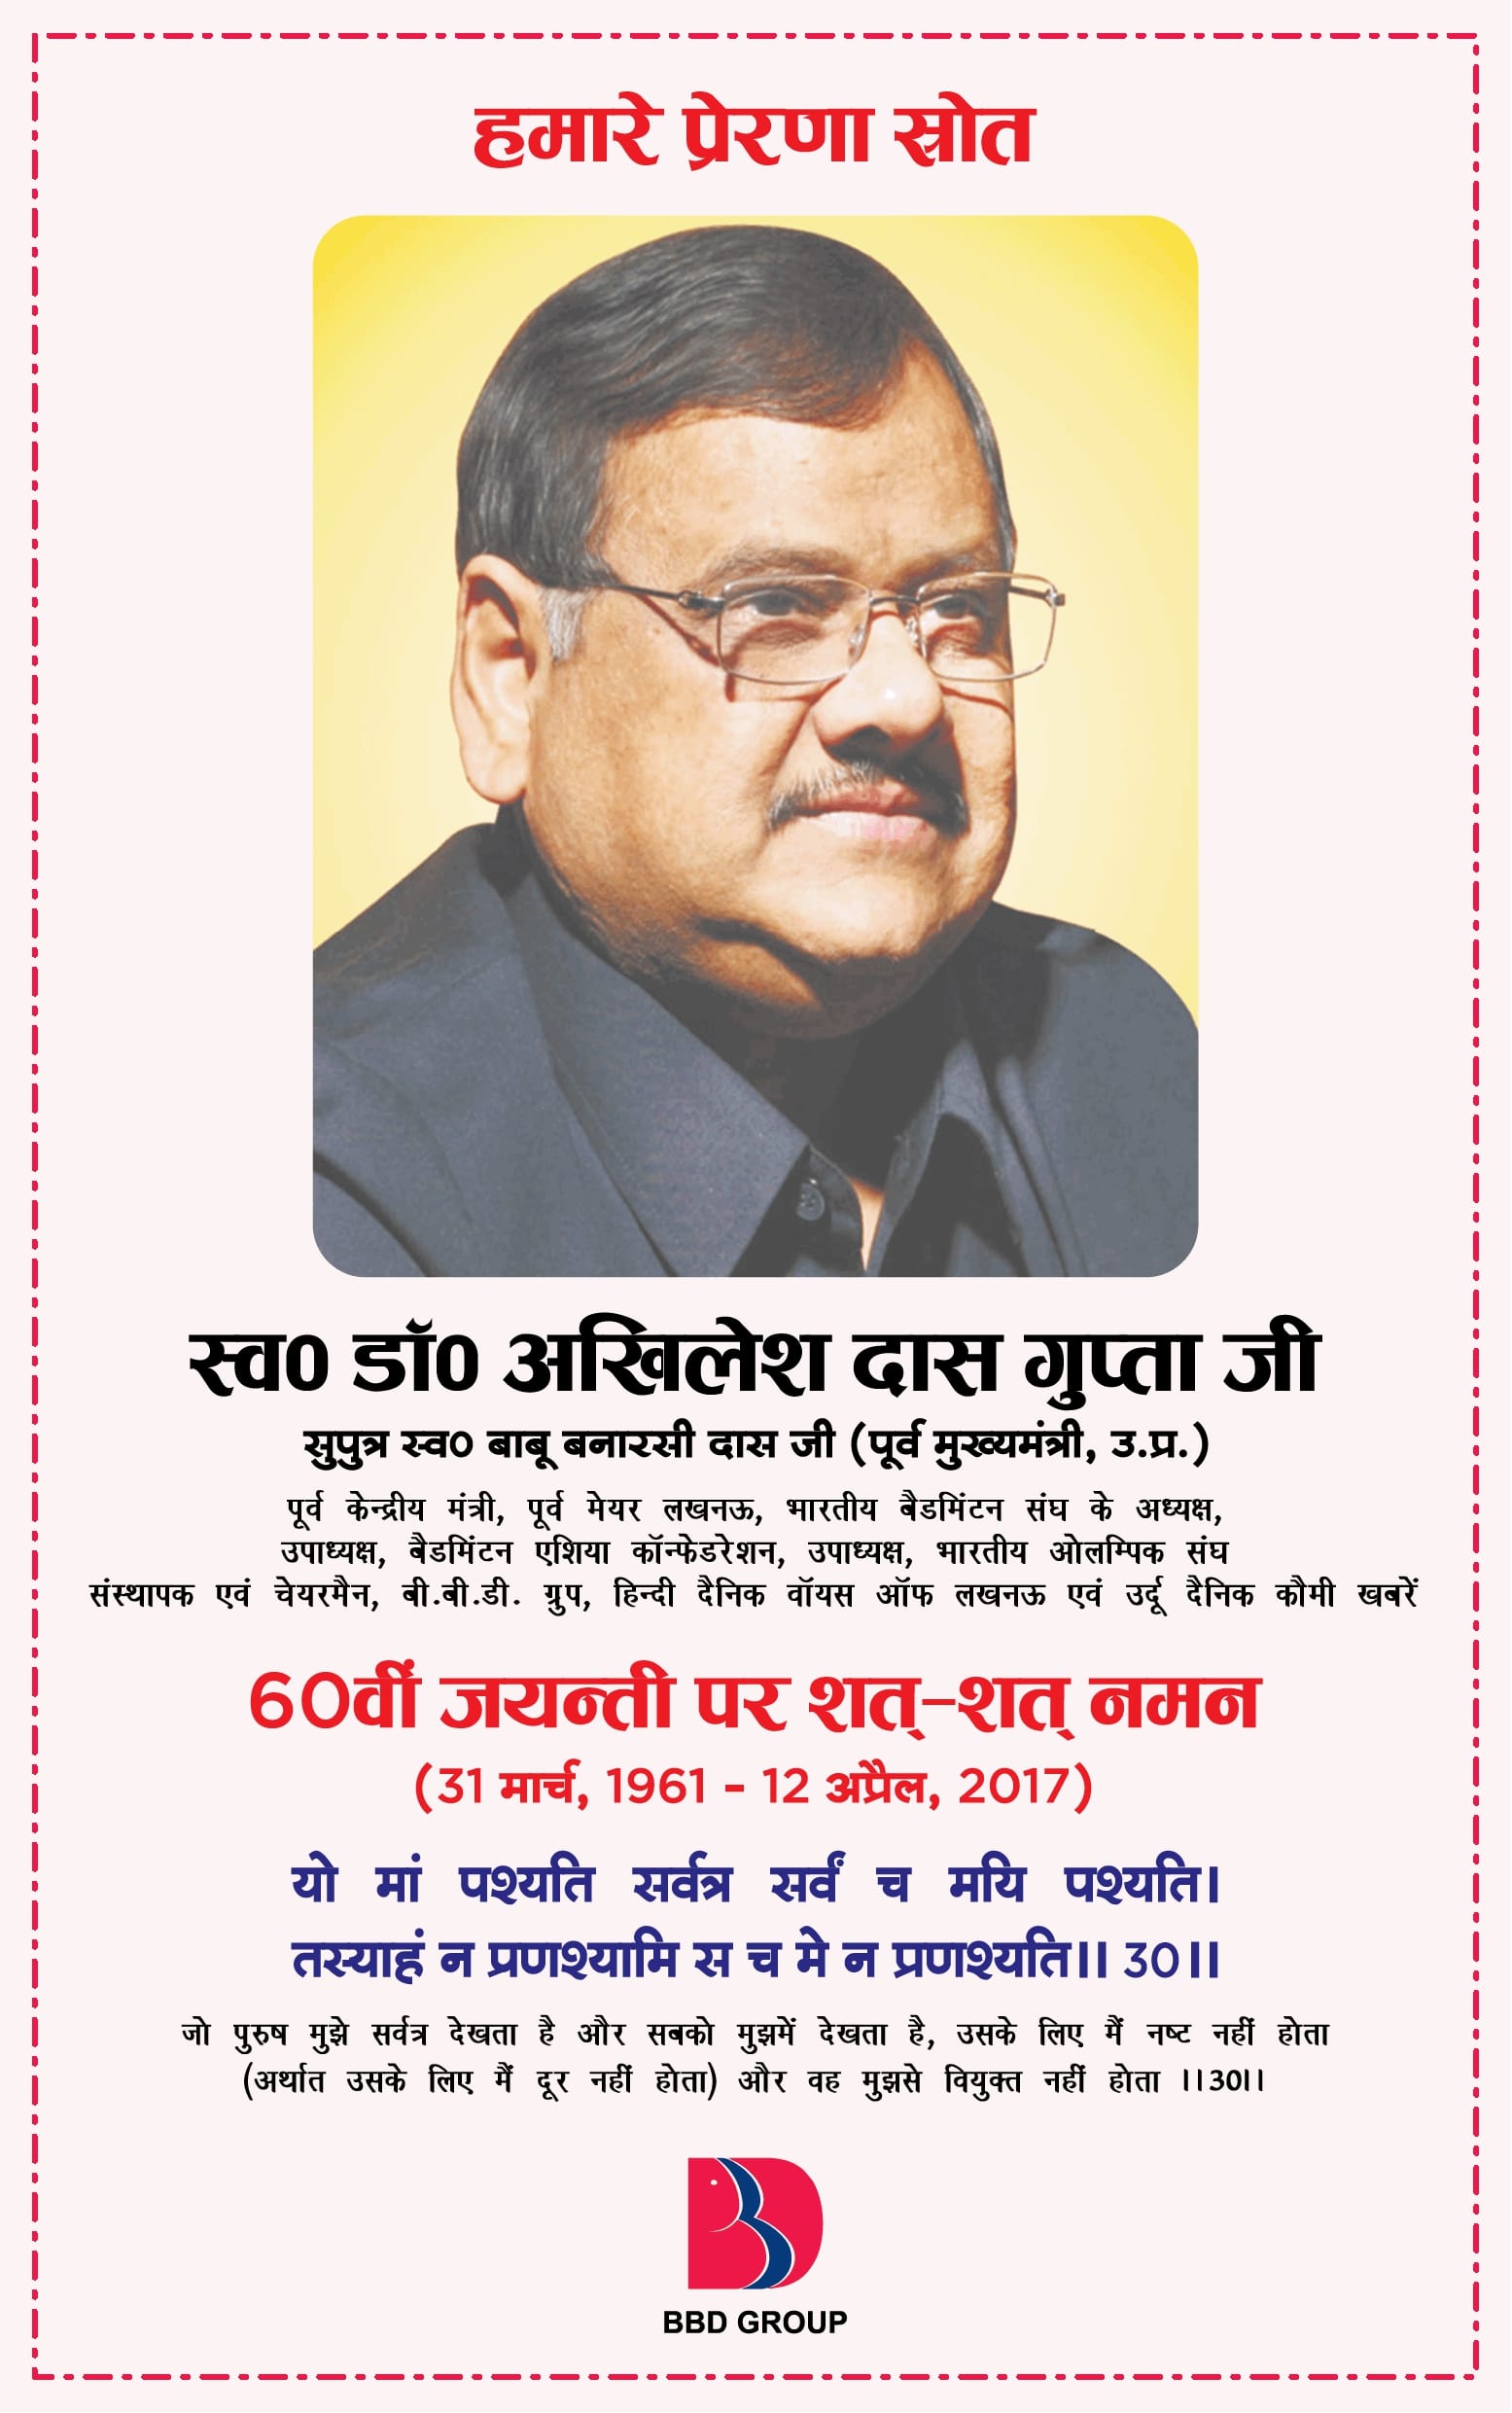 Remembrance Dr Akilesh Das Gupta Ji Ad - Advert Gallery